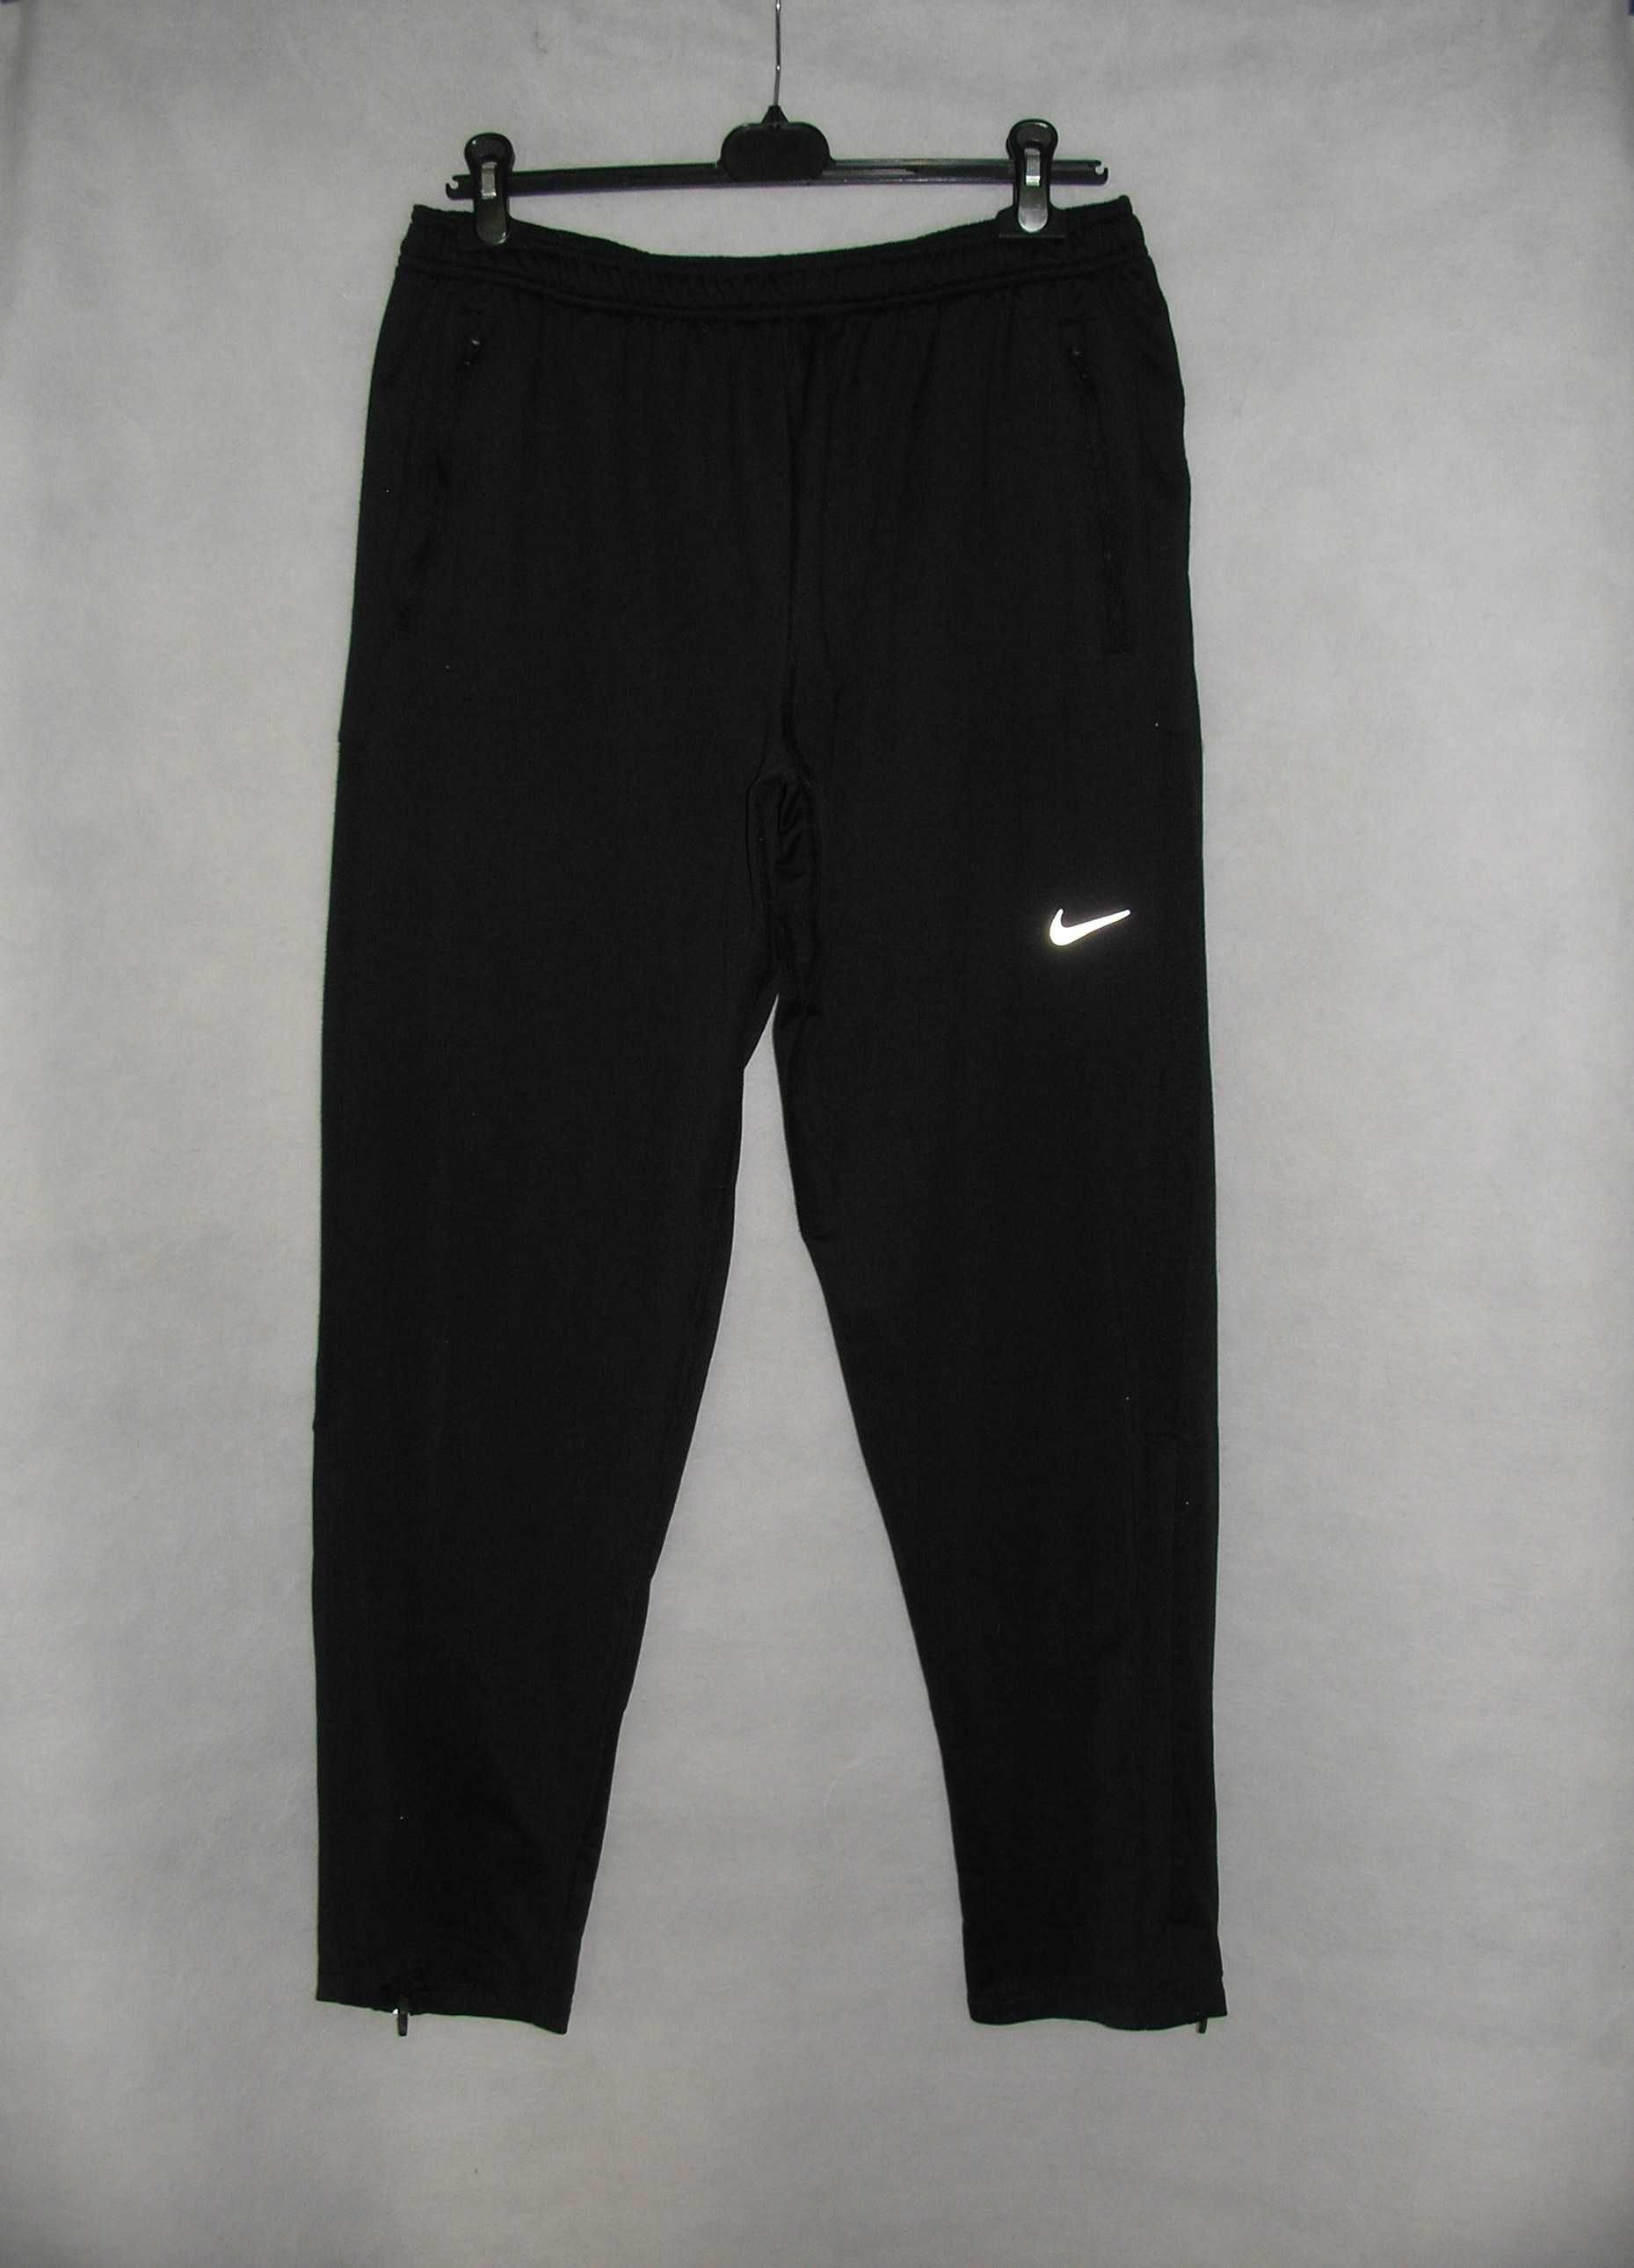 Мужские штаны Nike element thermal pant черные на микрофлисе размер XL